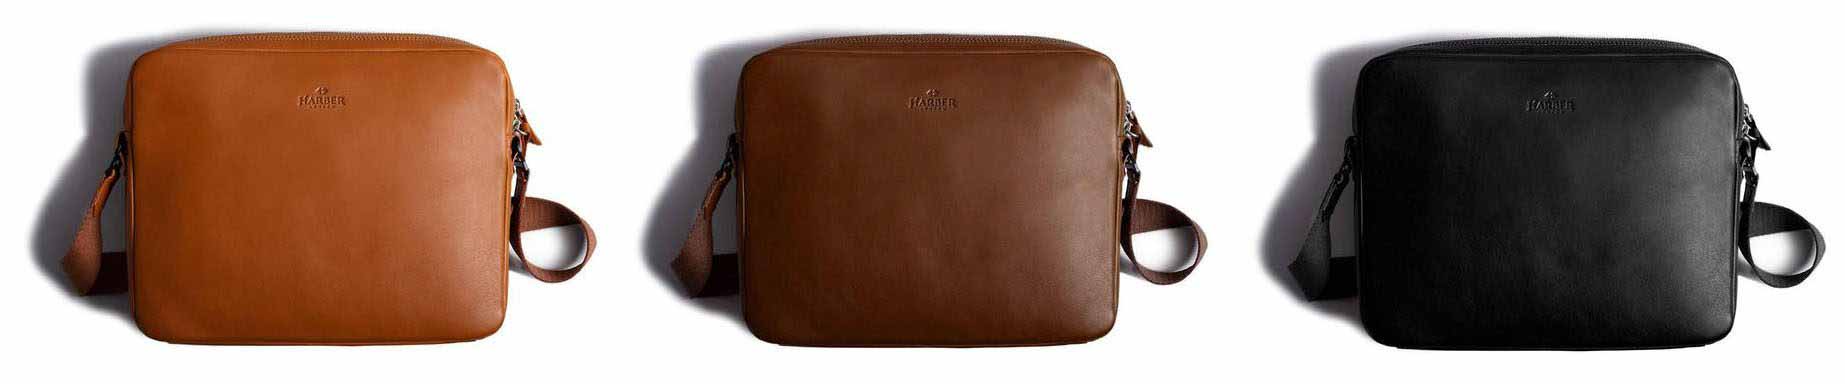 Кожаная сумка-мессенджер Harber London для iPad Pro 12,9 дюйма